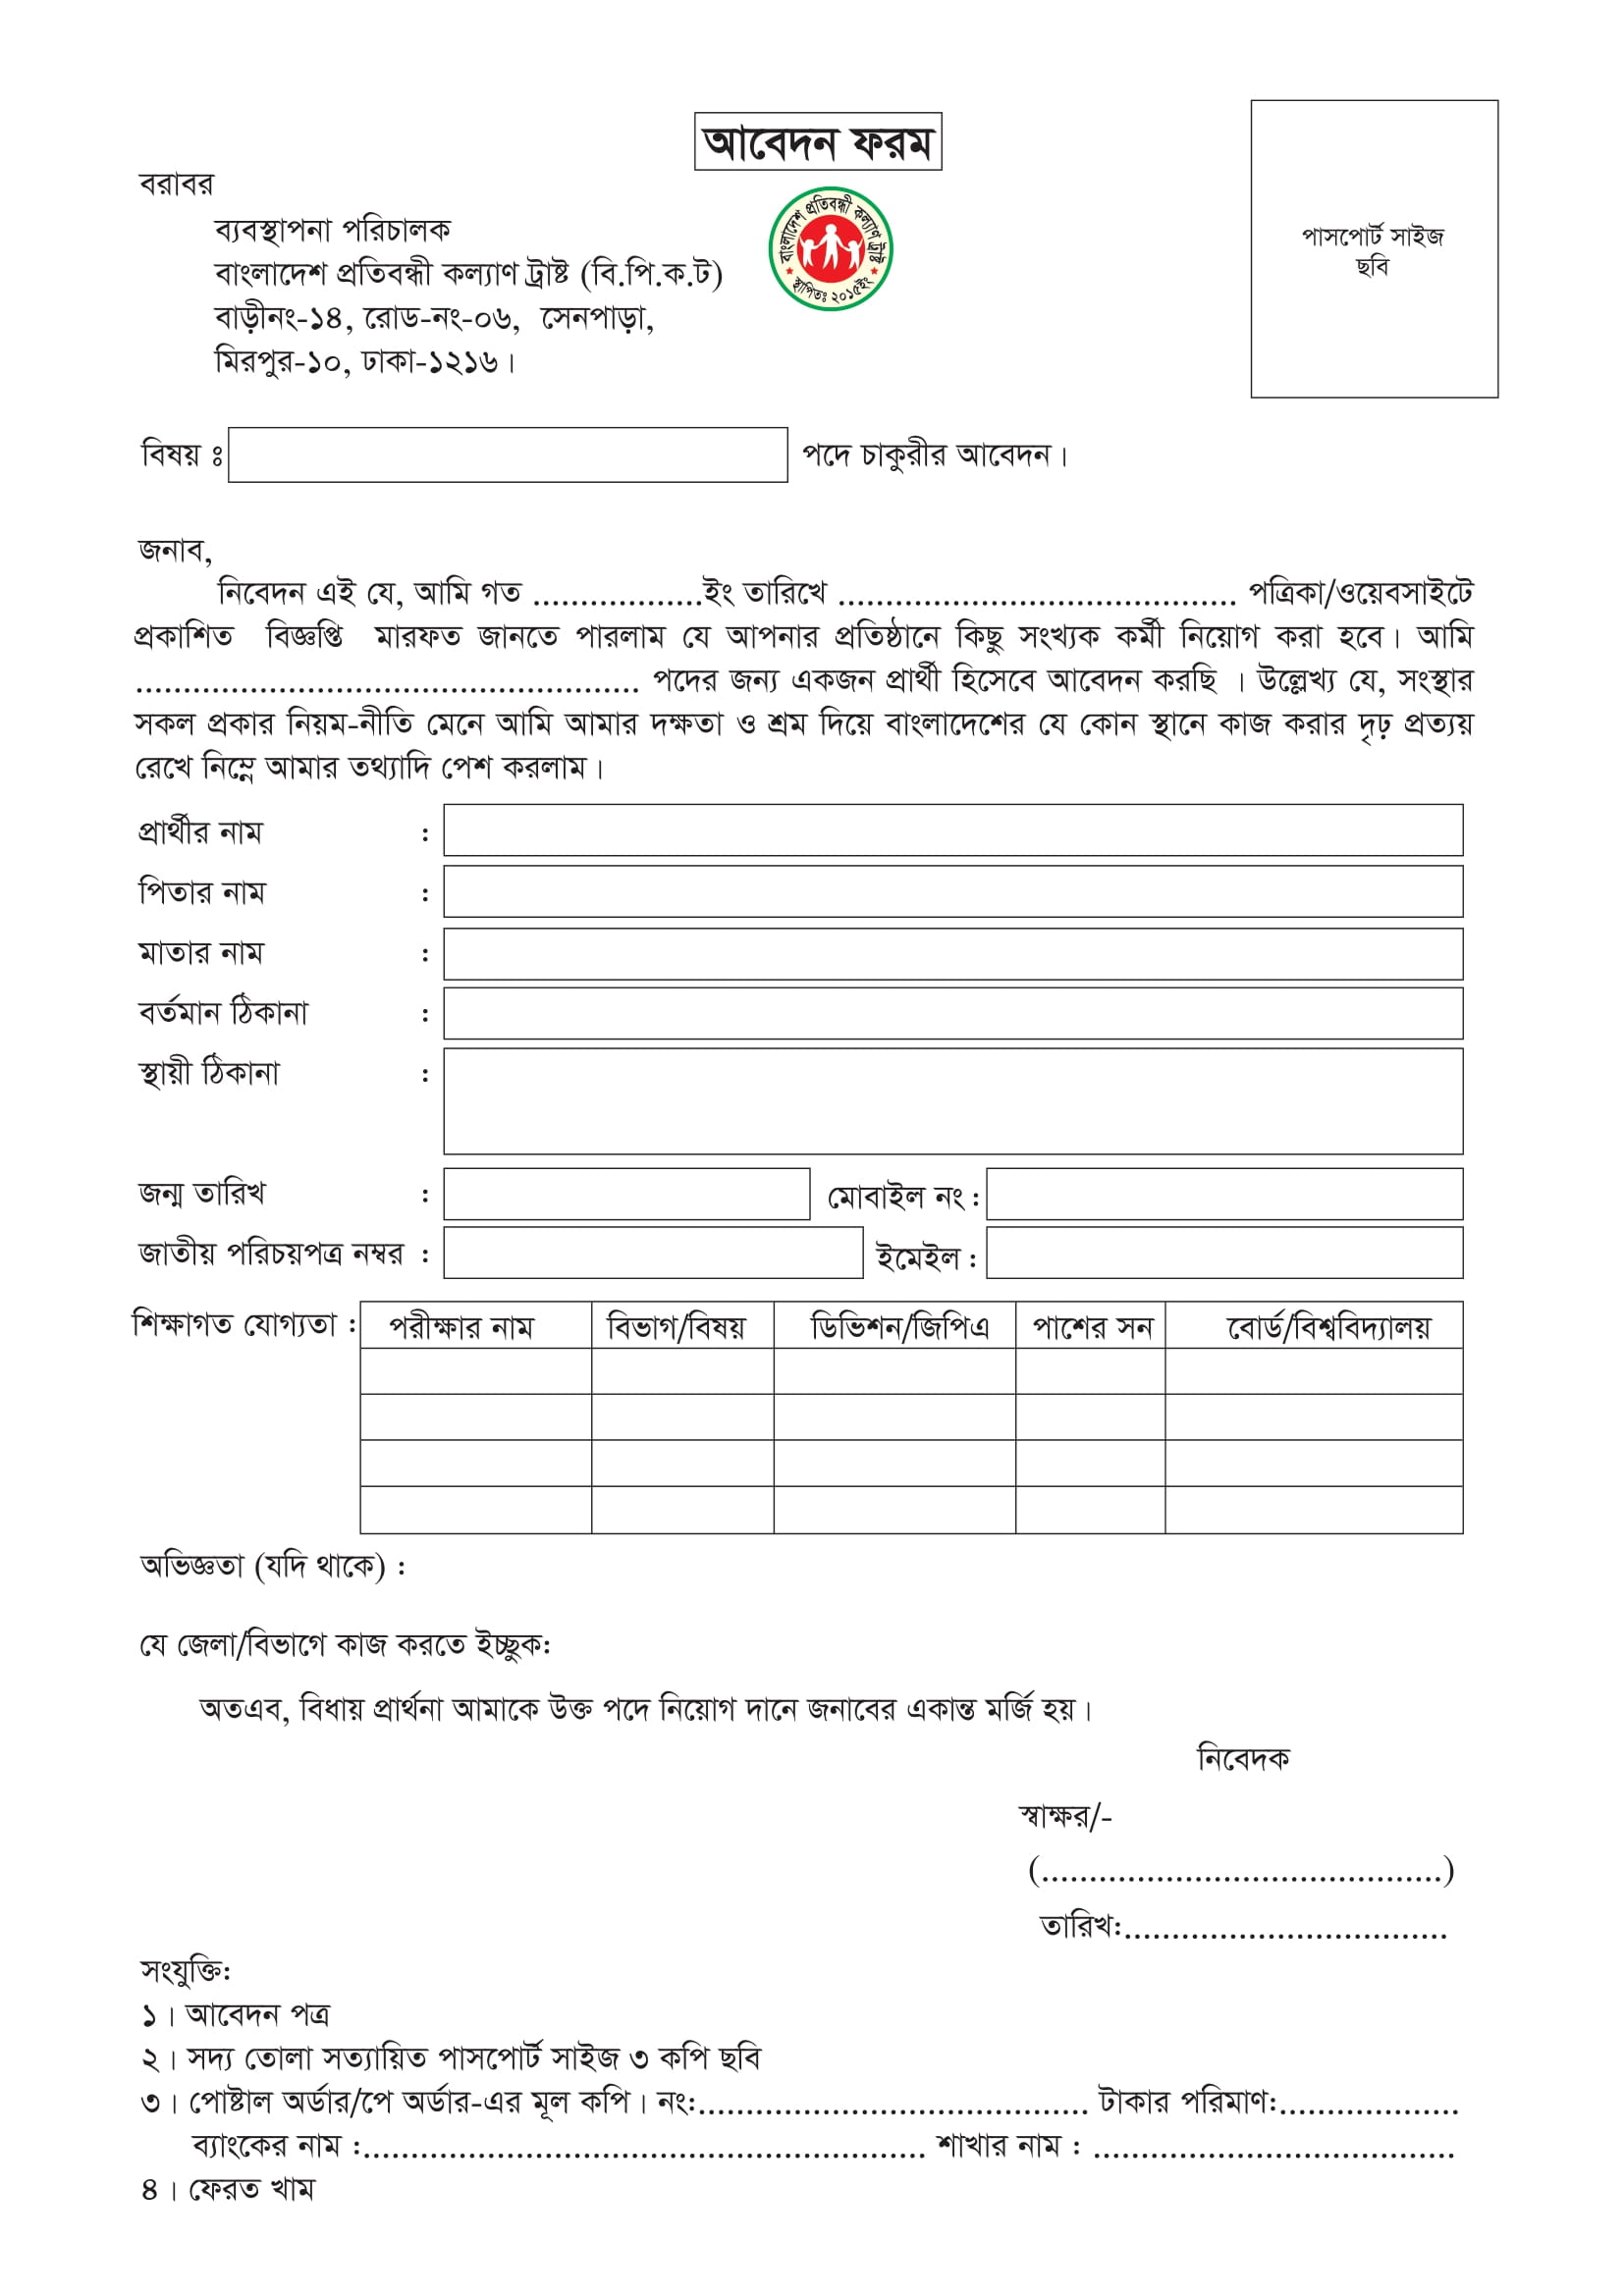 BANGLADESH PROTIBONDHI KOLLAN - TRUST Job Application Form